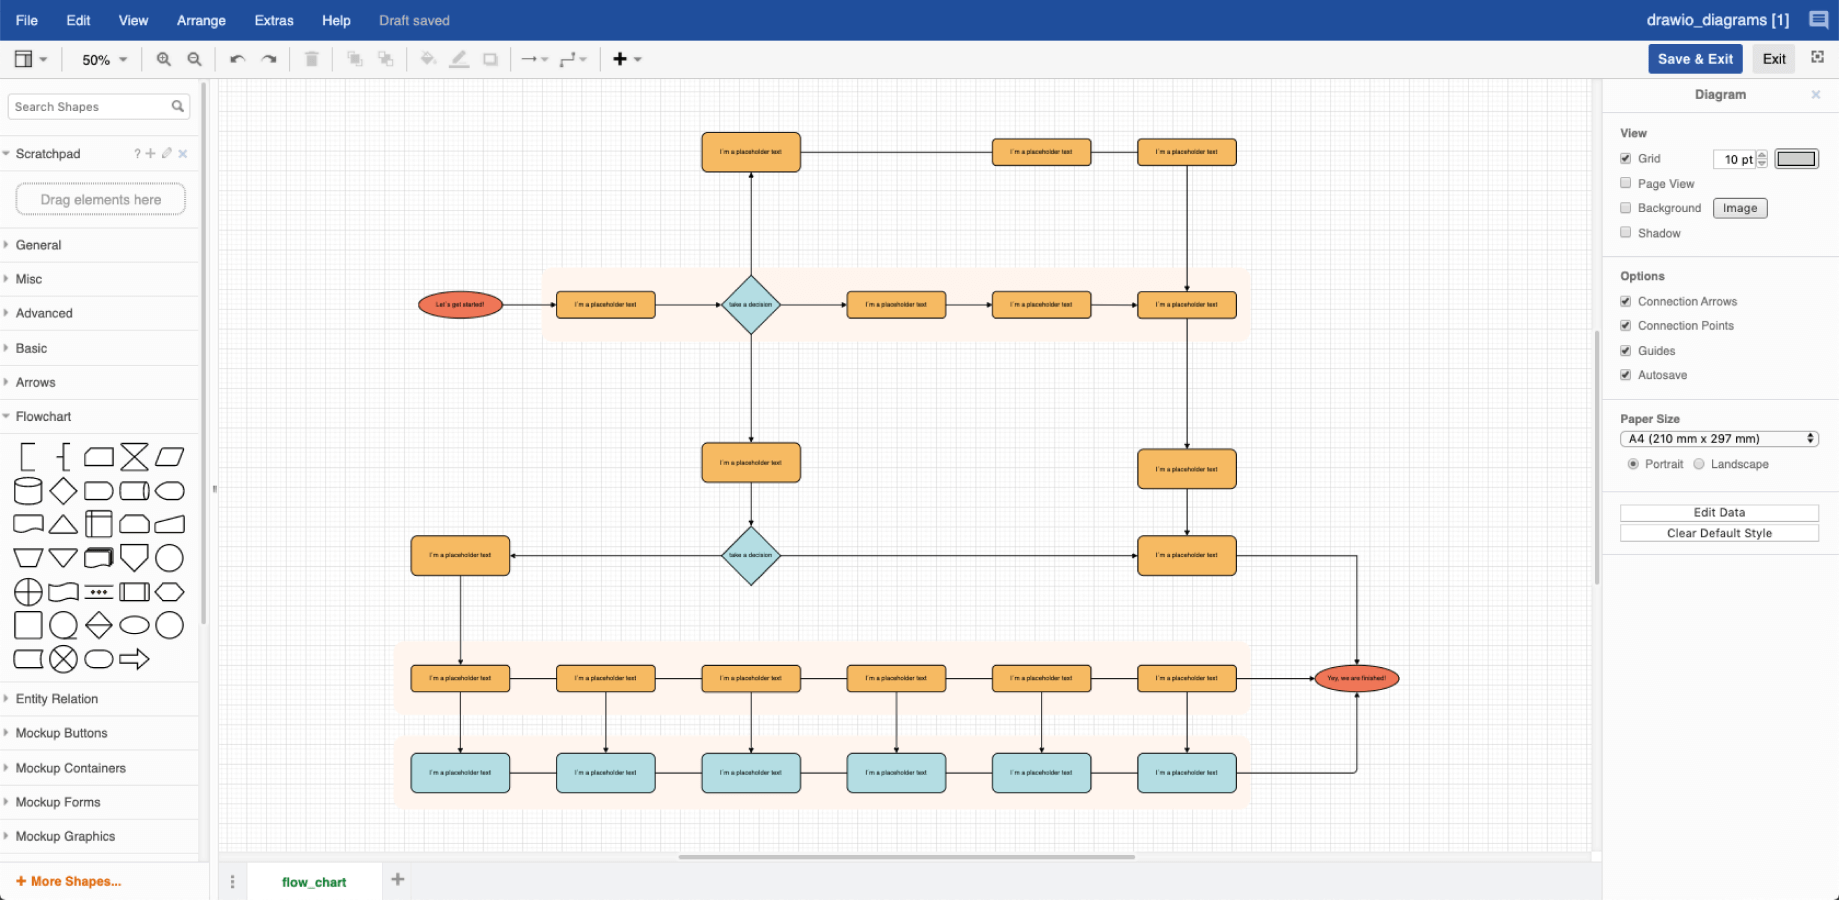 Sample process diagram courtesy of Draw.io